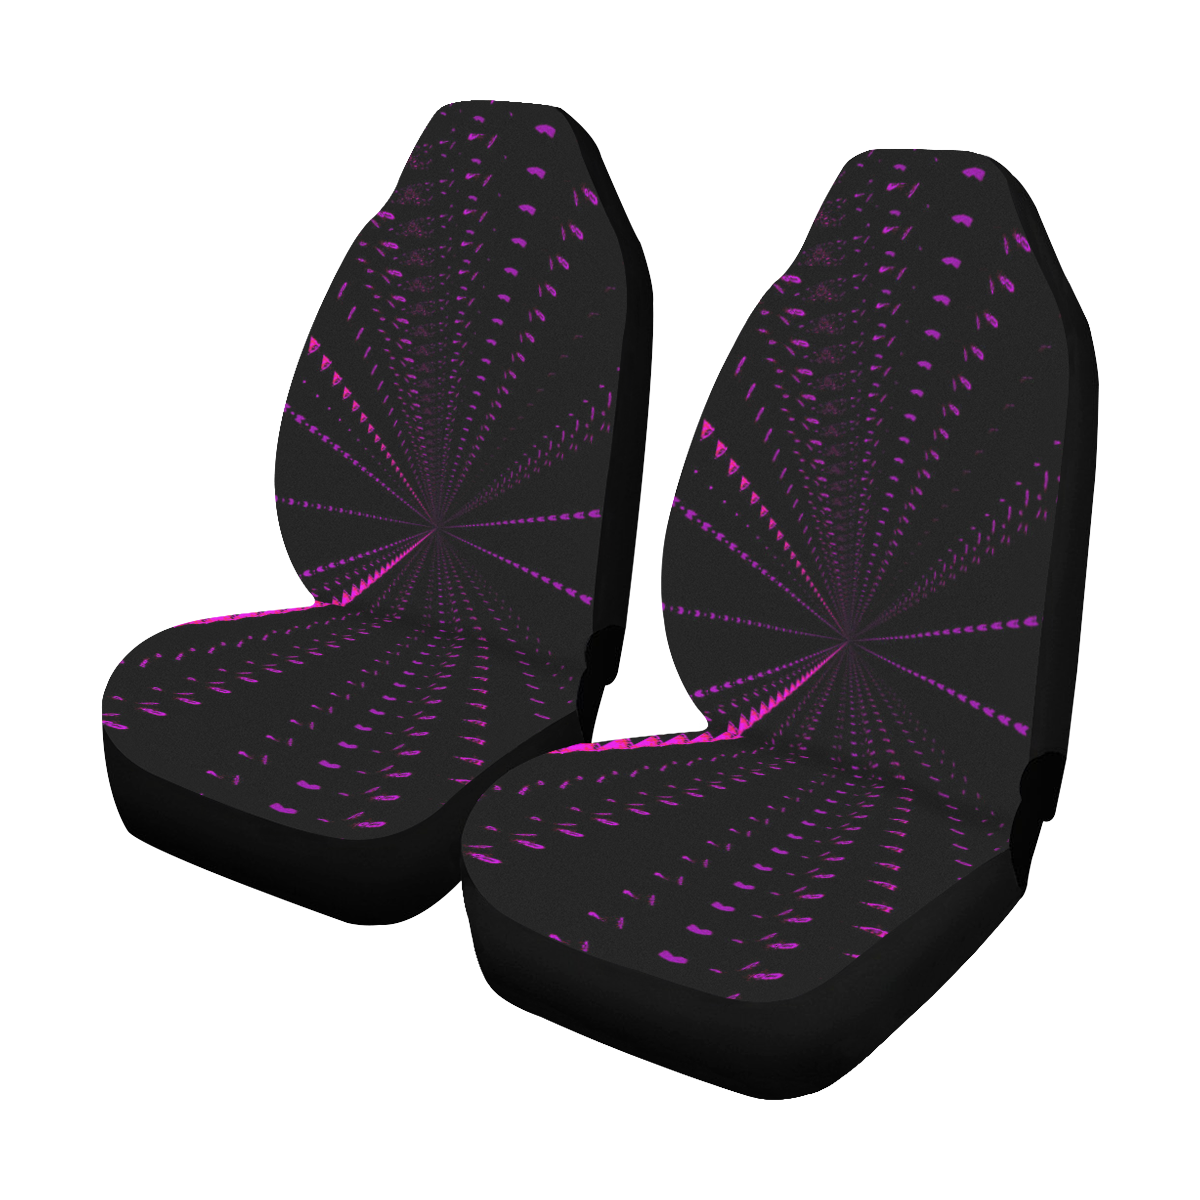 MATRYX Car Seat Covers (Set of 2)